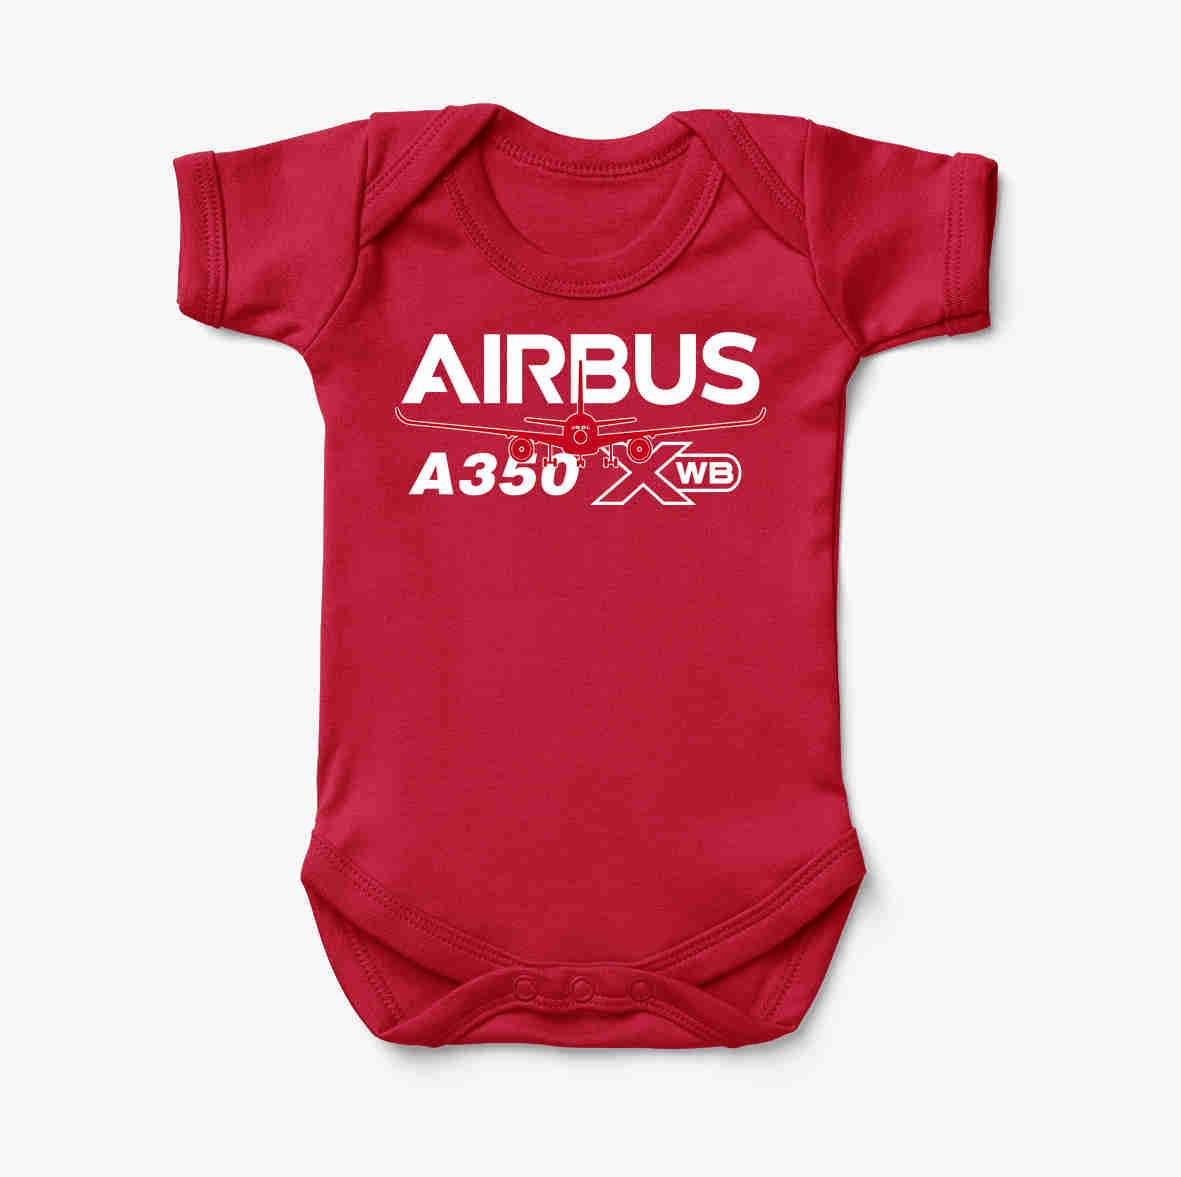 Amazing Airbus A350 XWB Designed Baby Bodysuits